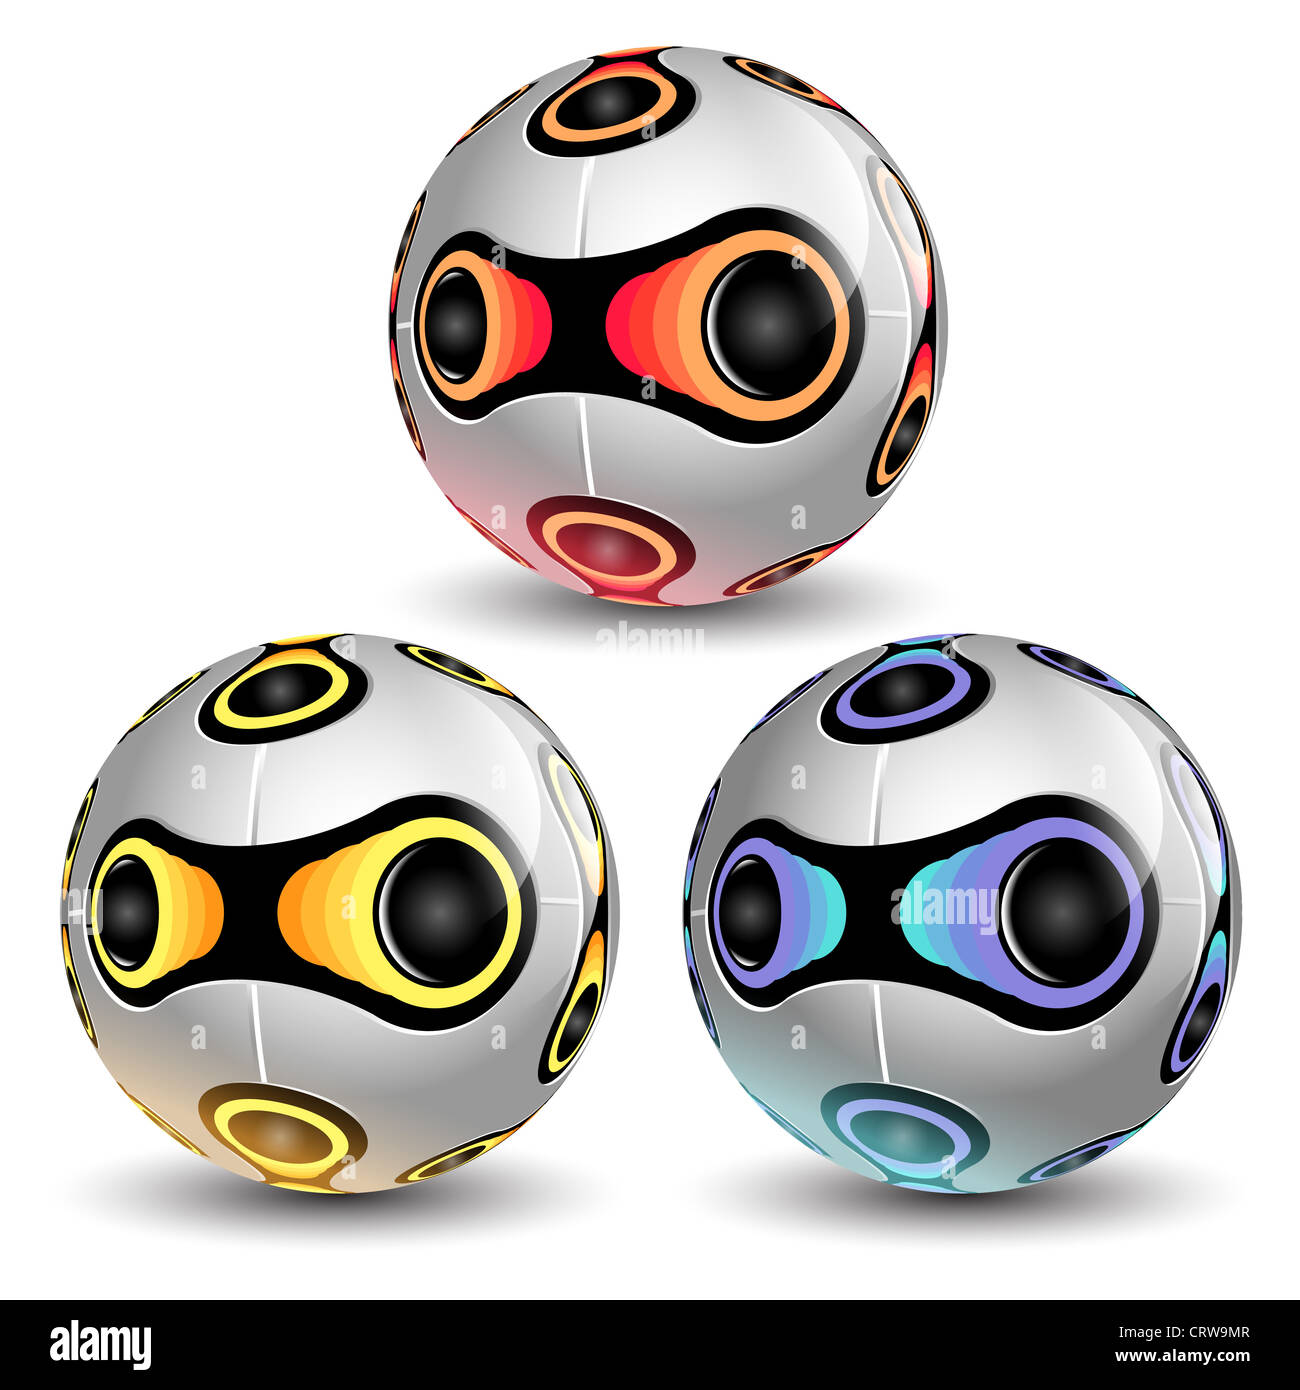 Colorful Soccer Balls Stock Photo